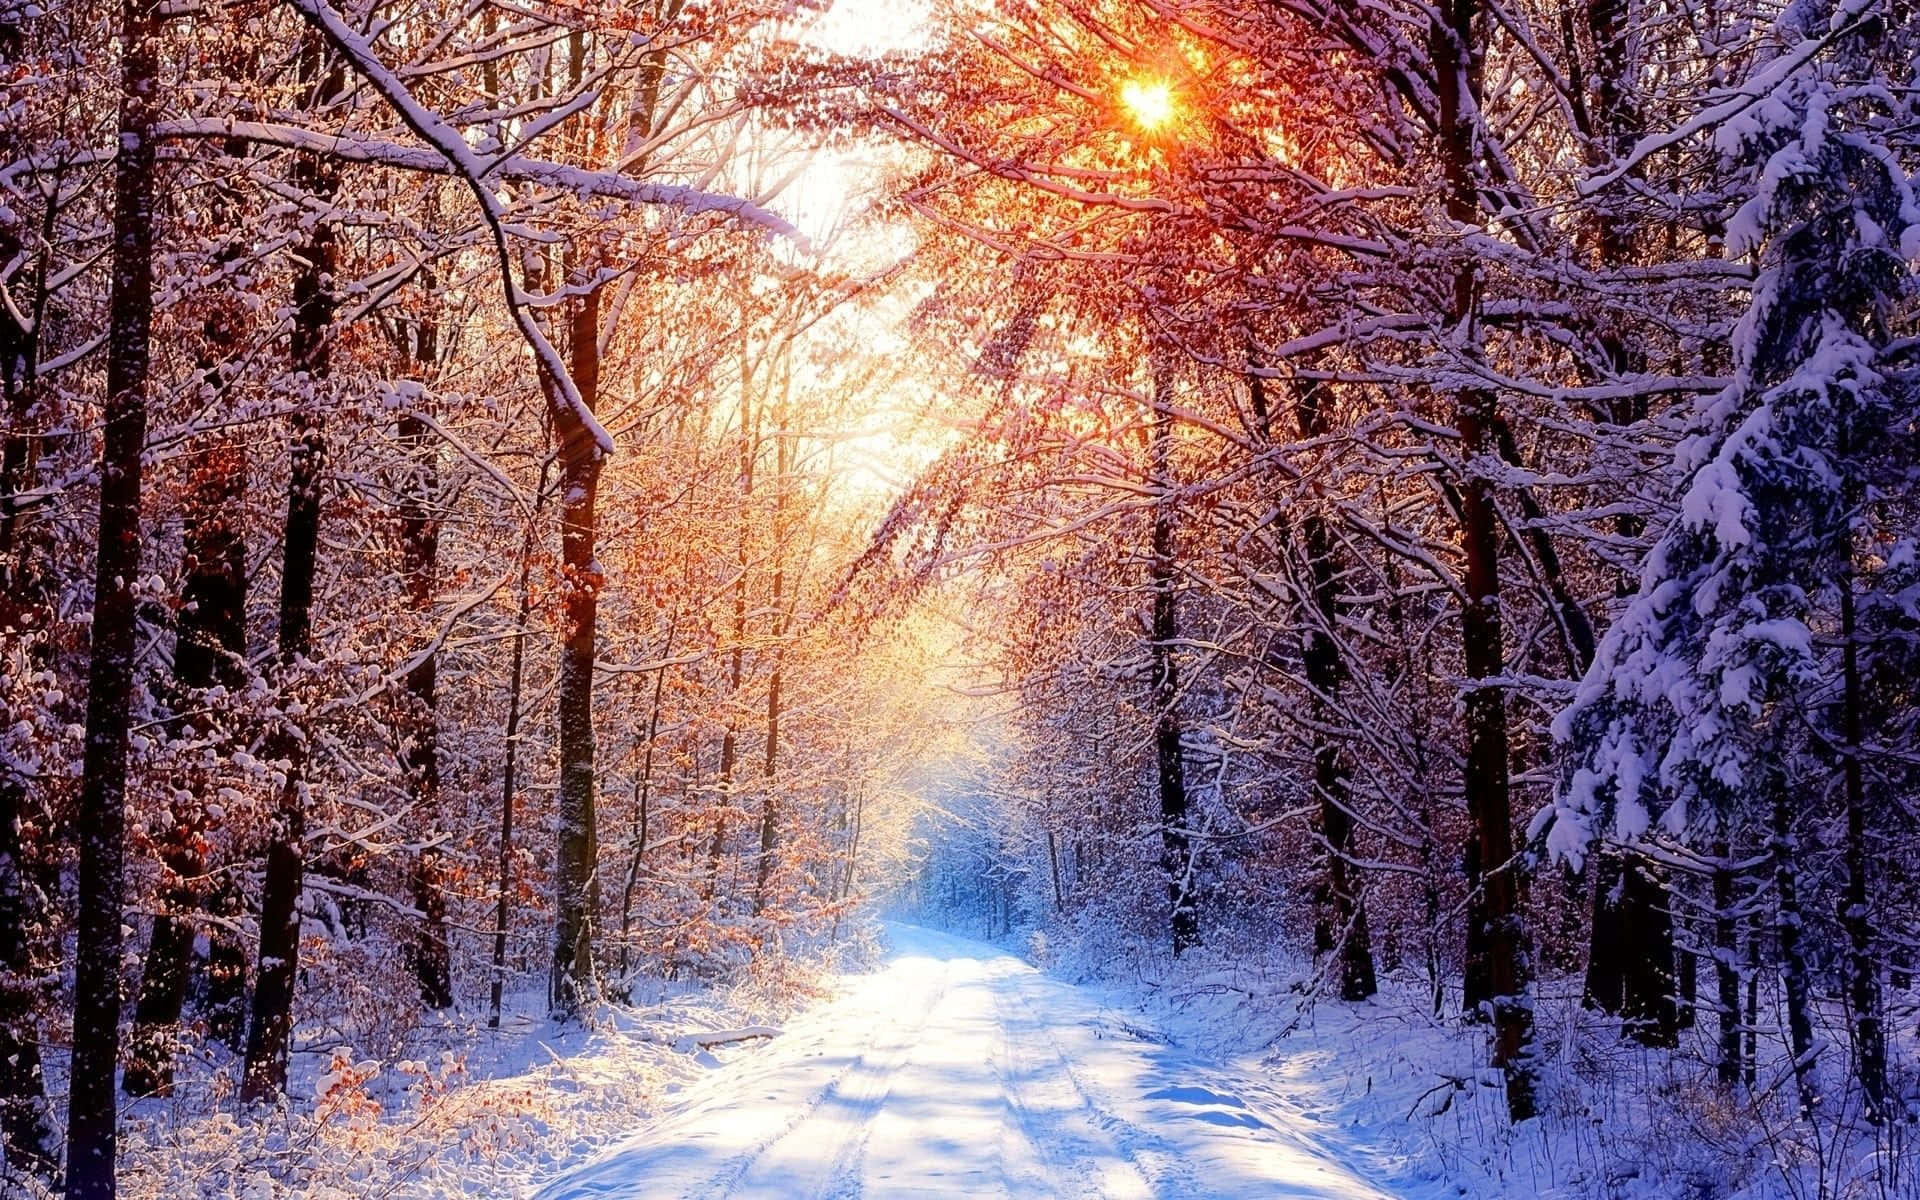 Magical Winter Solstice Scenery Wallpaper